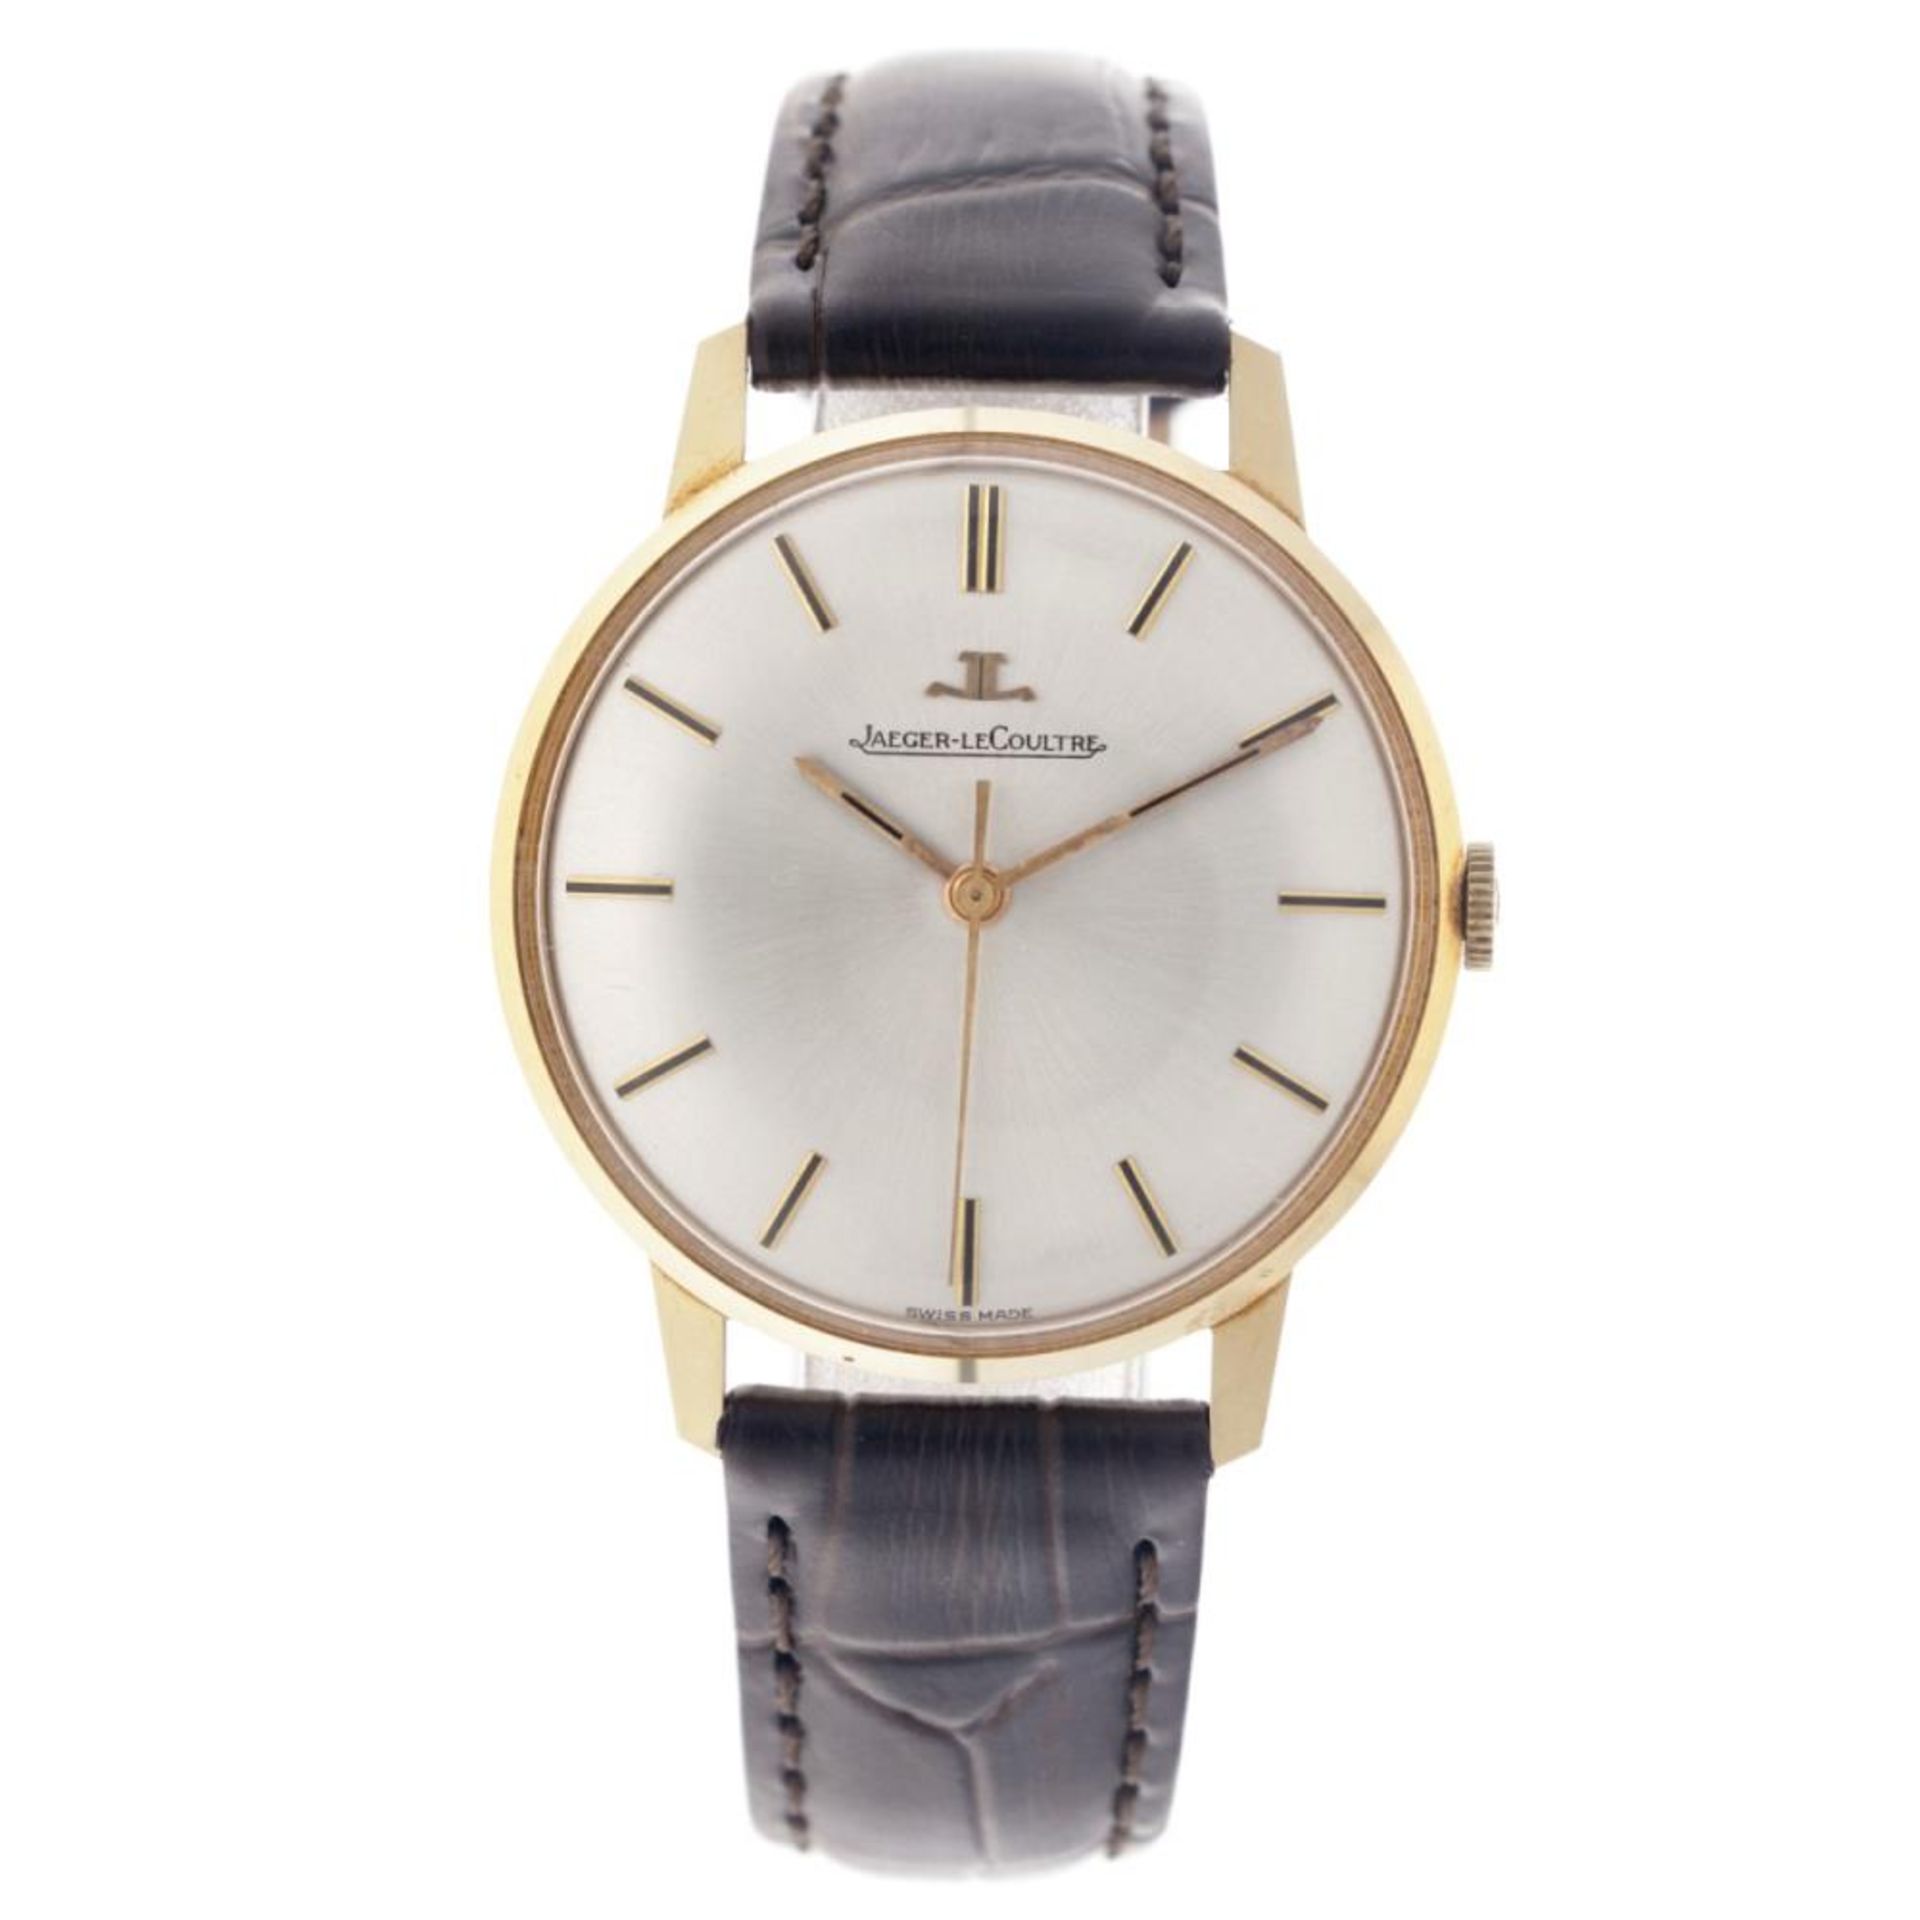 Jaeger-LeCoultre vintage dress watch 20007 -Men's watch - approx. 1965.